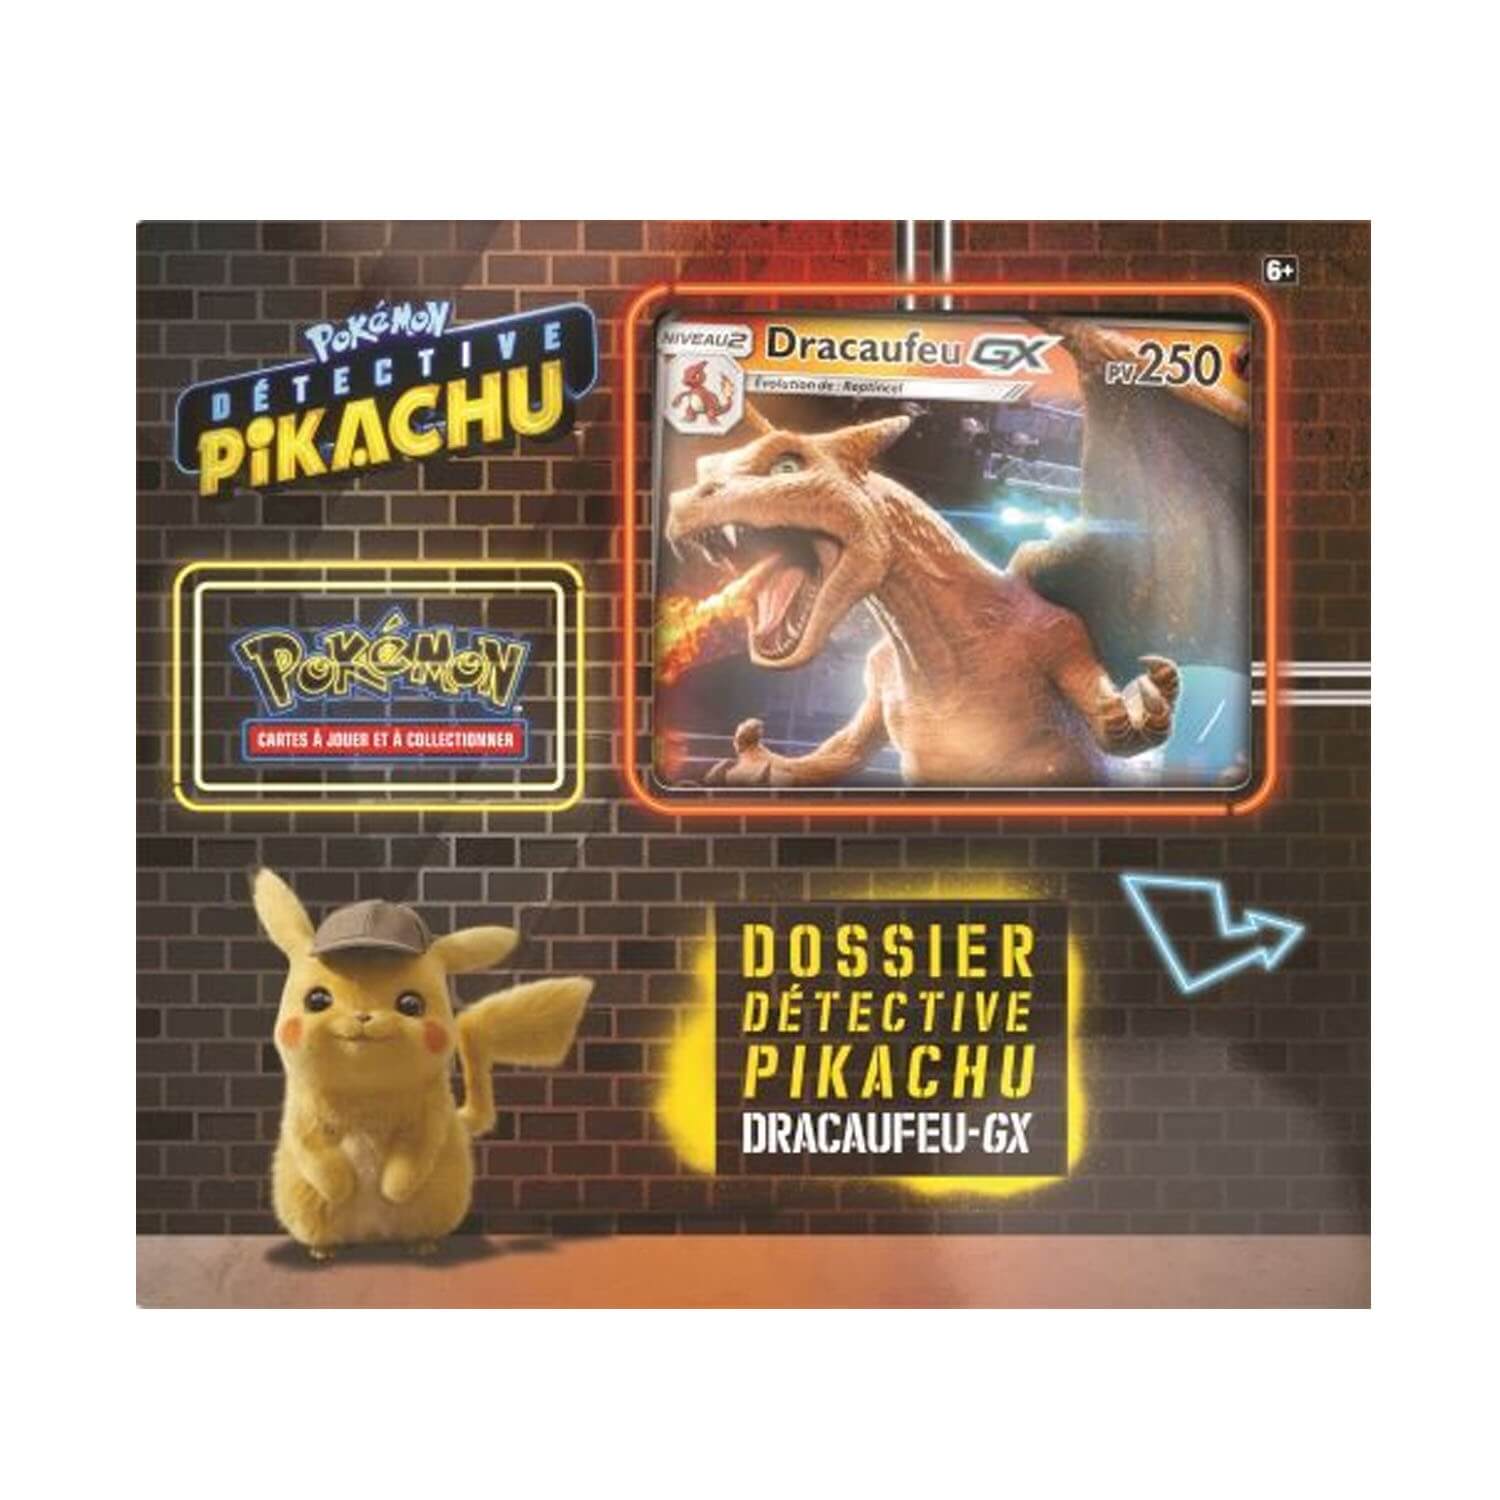 https://www.foxchip-collector.com/126546/coffret-pokemon-detective-pikachu-dracaufeu-gxpokemon.jpg